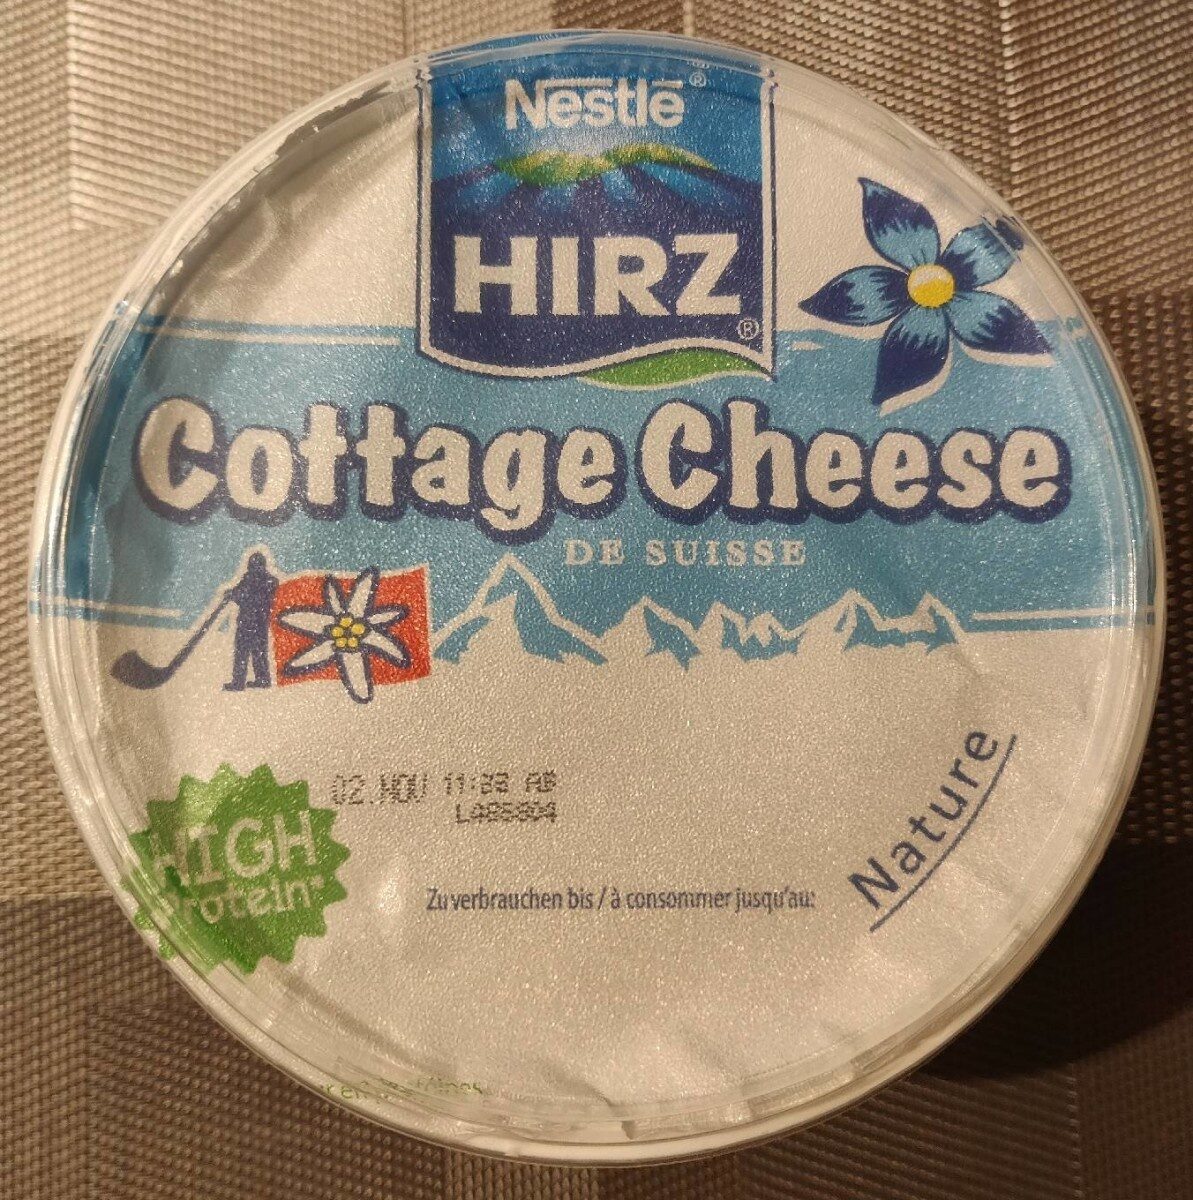 Nestlé Hirz Cottage Cheese - Product - fr